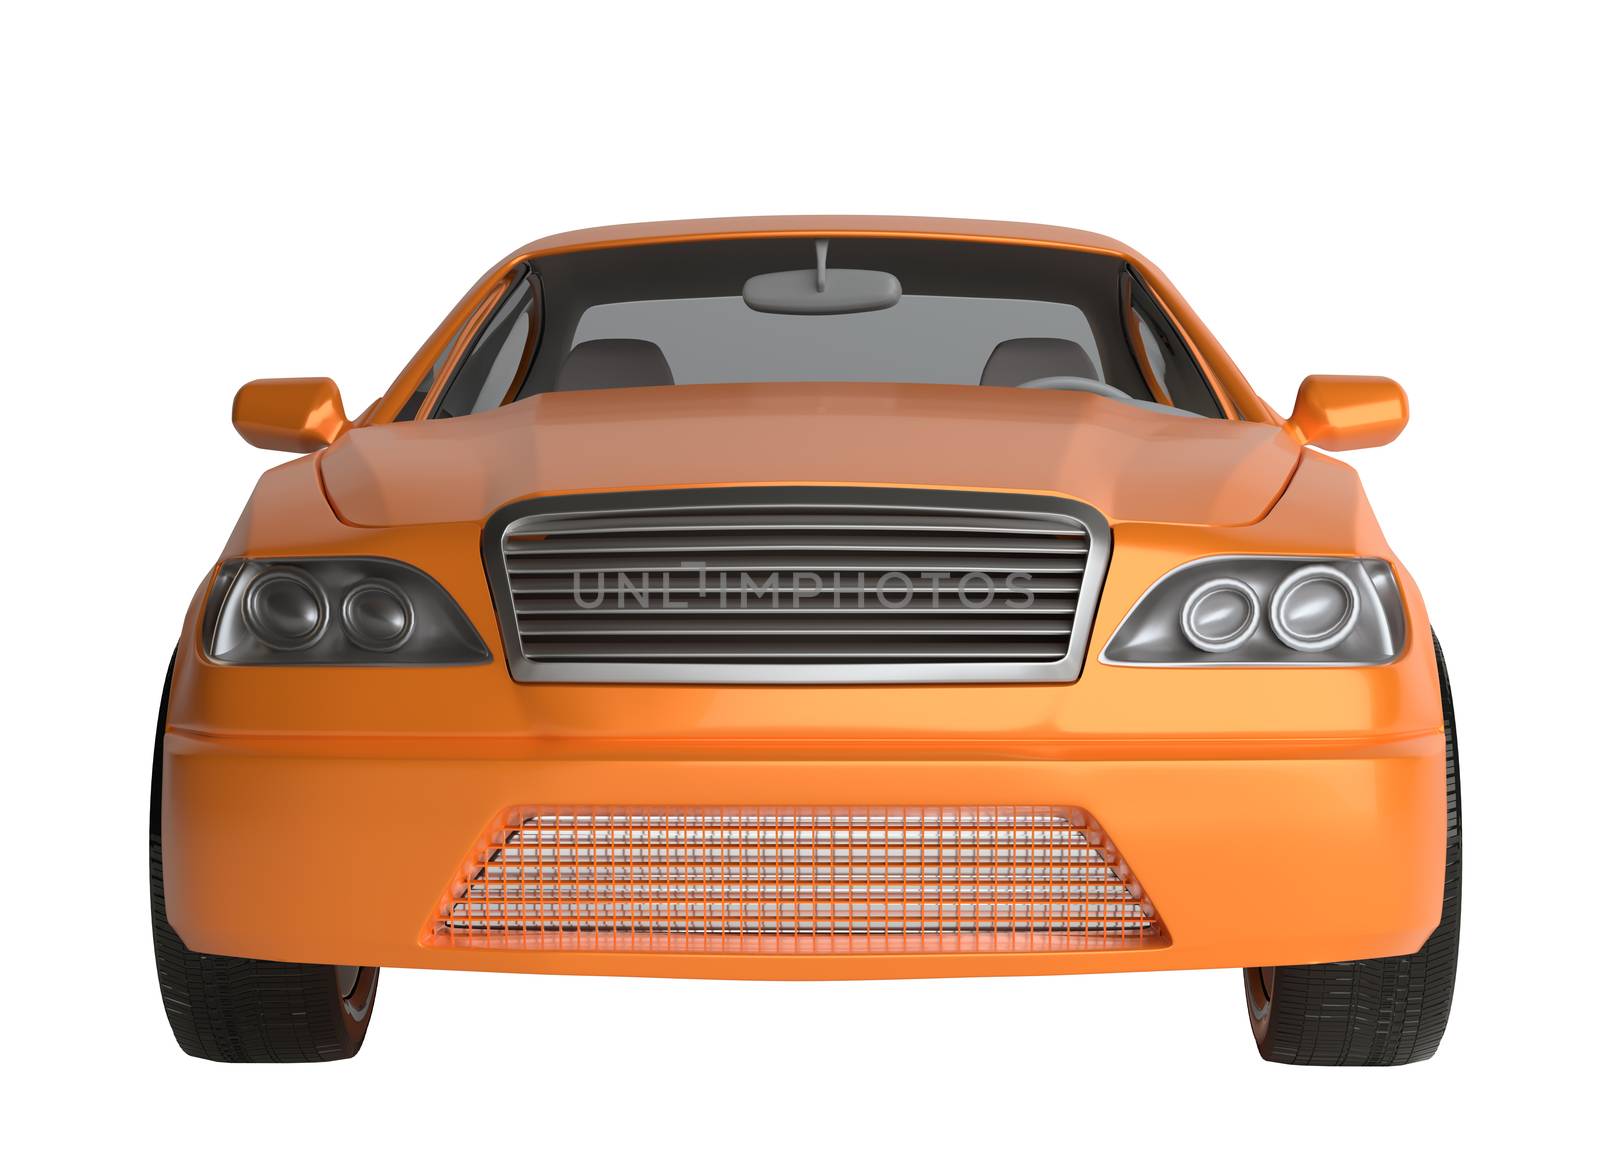 A CG render of a generic luxury sedan by cherezoff